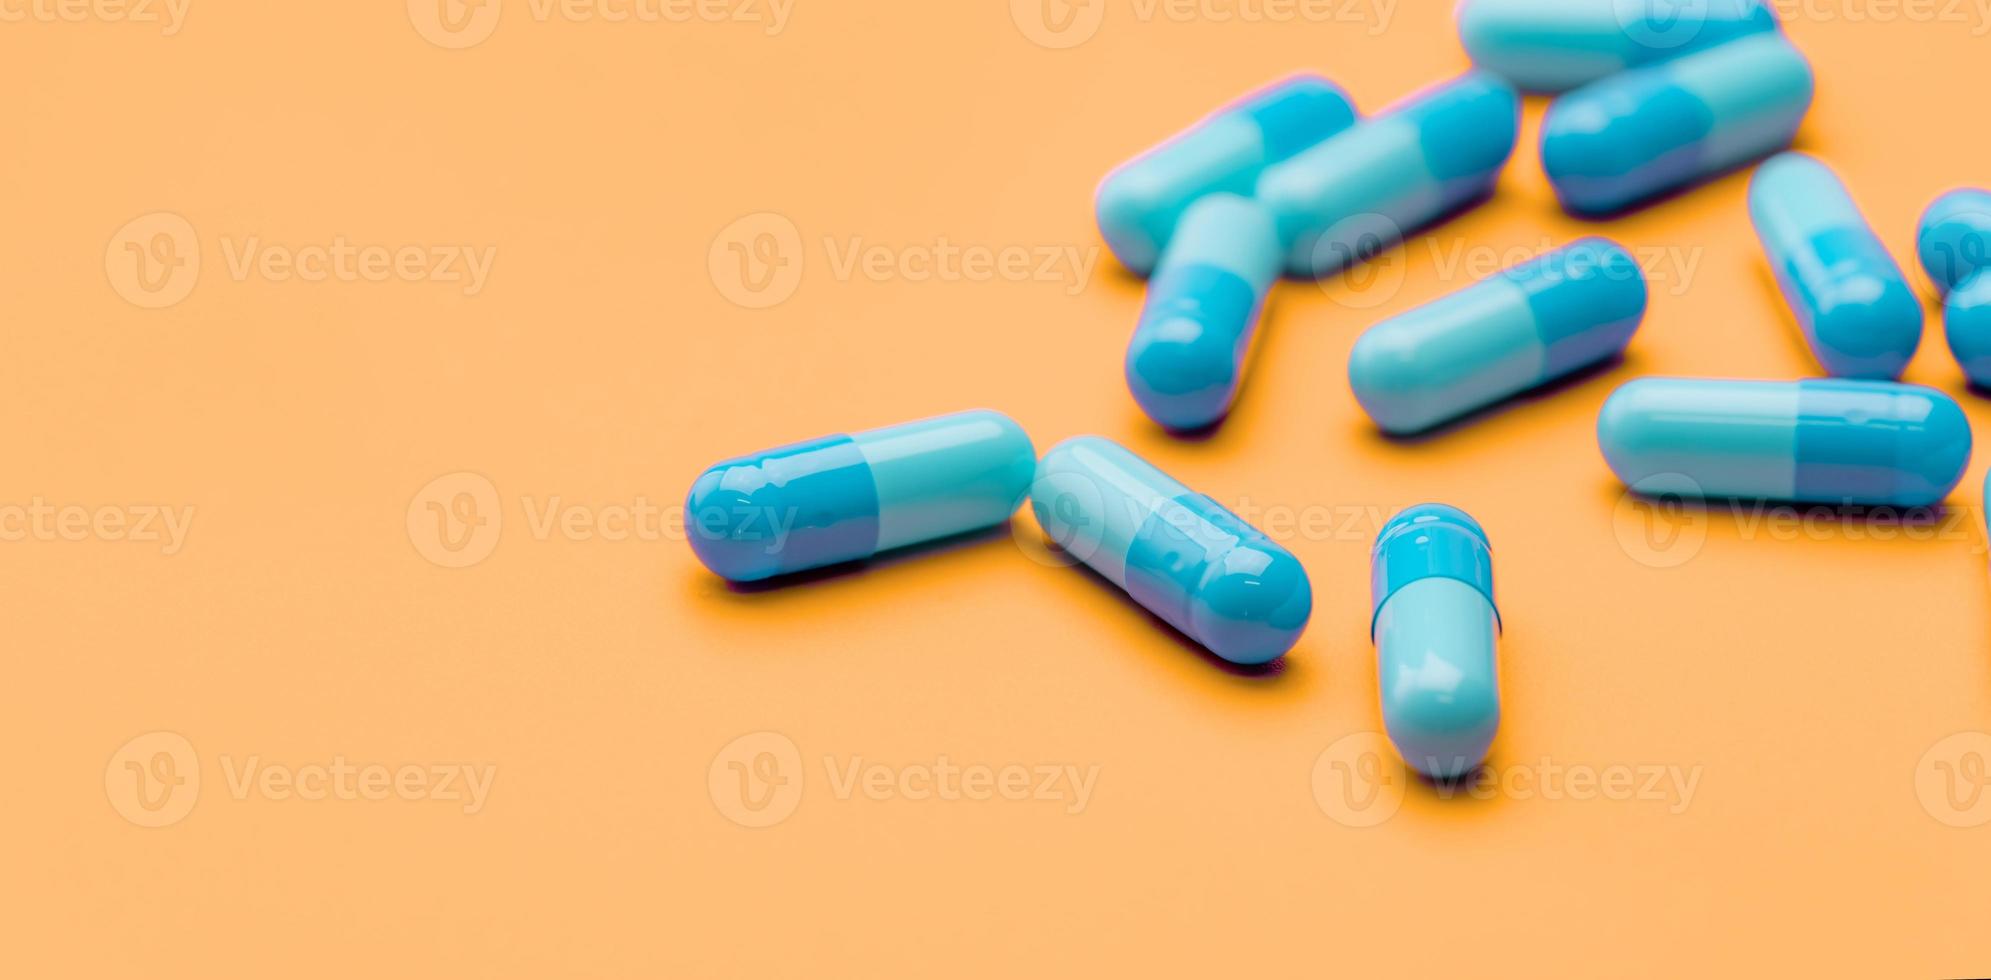 píldoras de cápsula antibiótica azul esparcidas sobre fondo amarillo. resistencia a los antibióticos. industria farmacéutica. concepto de salud y medicina. concepto de presupuesto de salud. industria de fabricación de cápsulas. foto